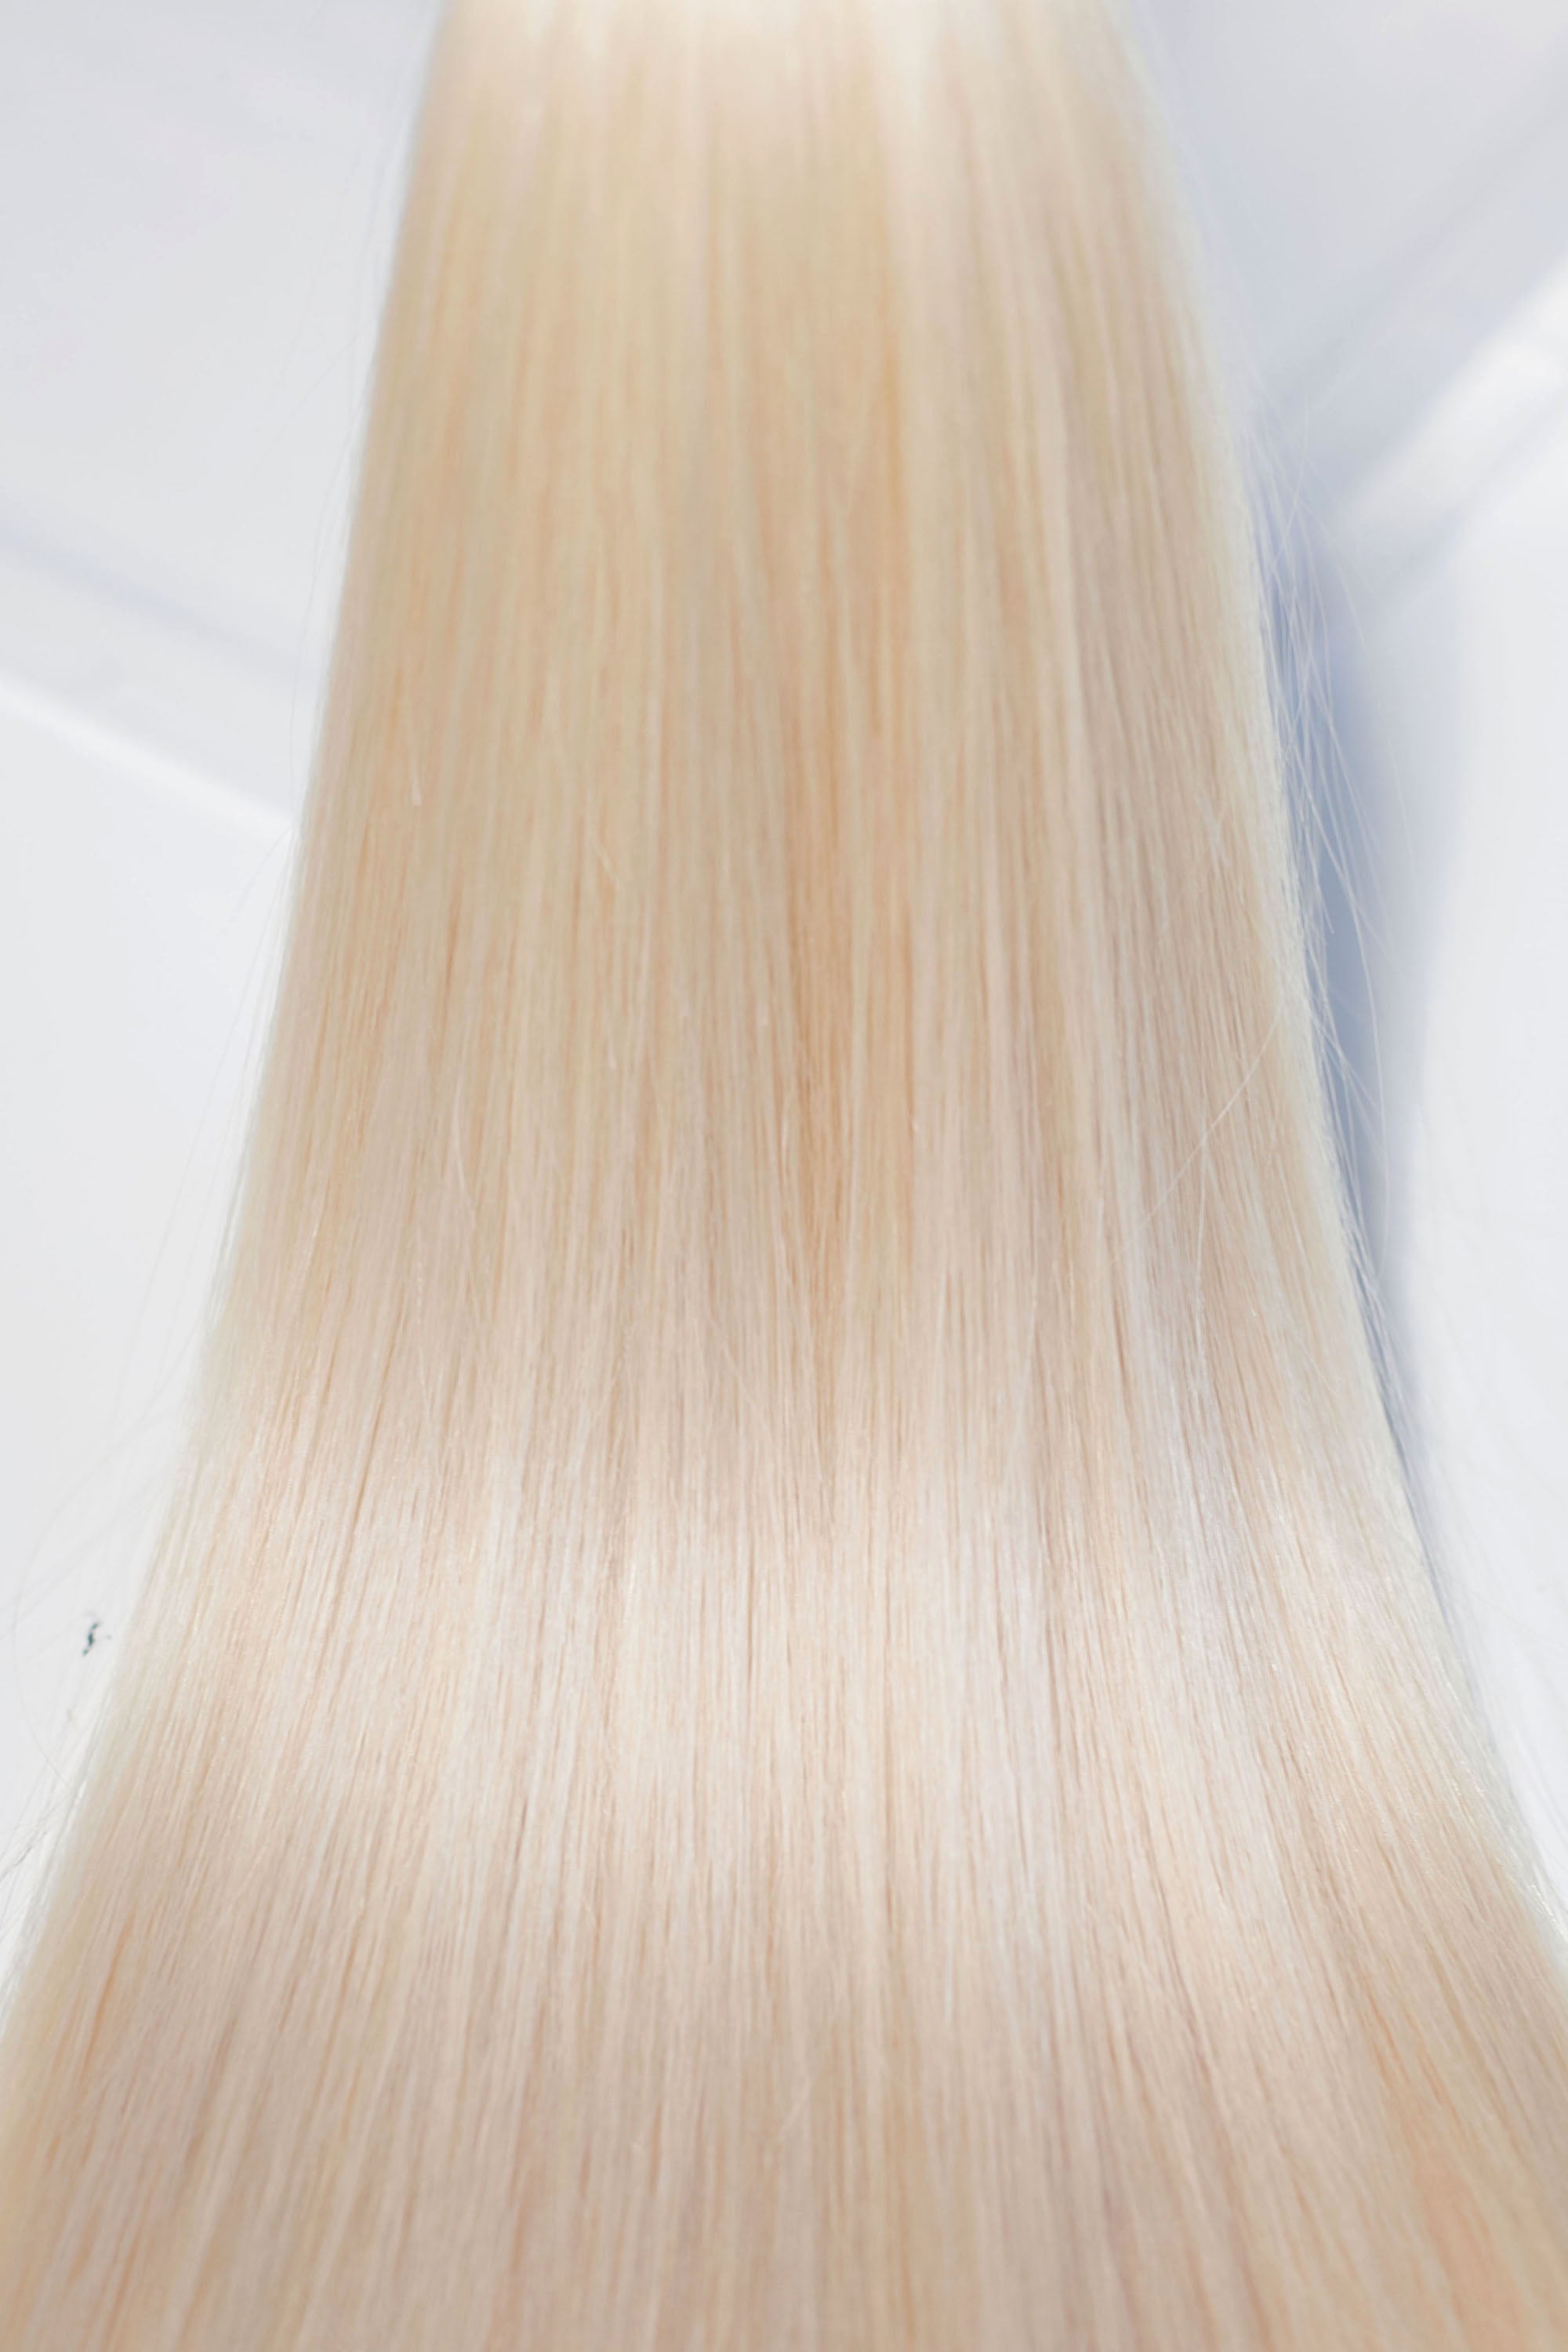 Behair professional Keratin Tip "Premium" 28" (70cm) Natural Straight Ice Blond #000 - 25g (Standart - 0.7g each pcs) hair extensions